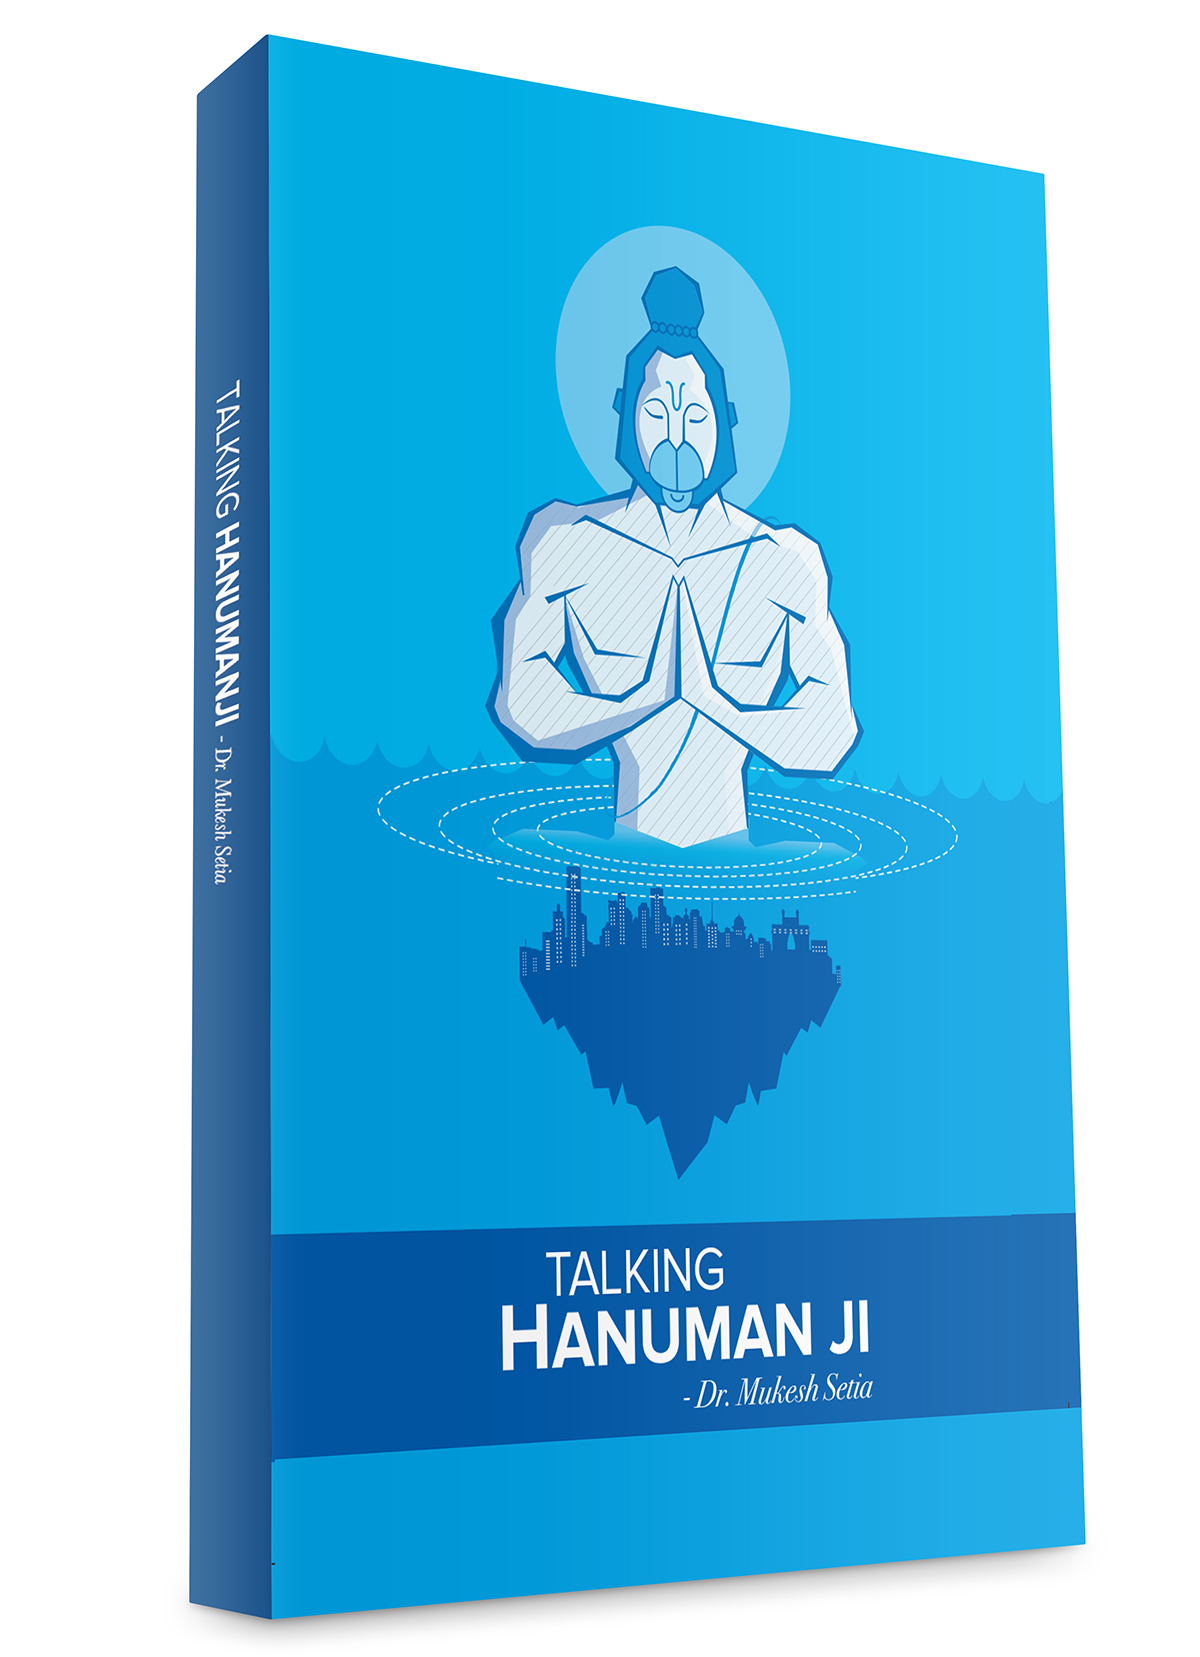 book cover Hanuman hanumanji indian God colour book design spirituality spiritual ram bhagwan